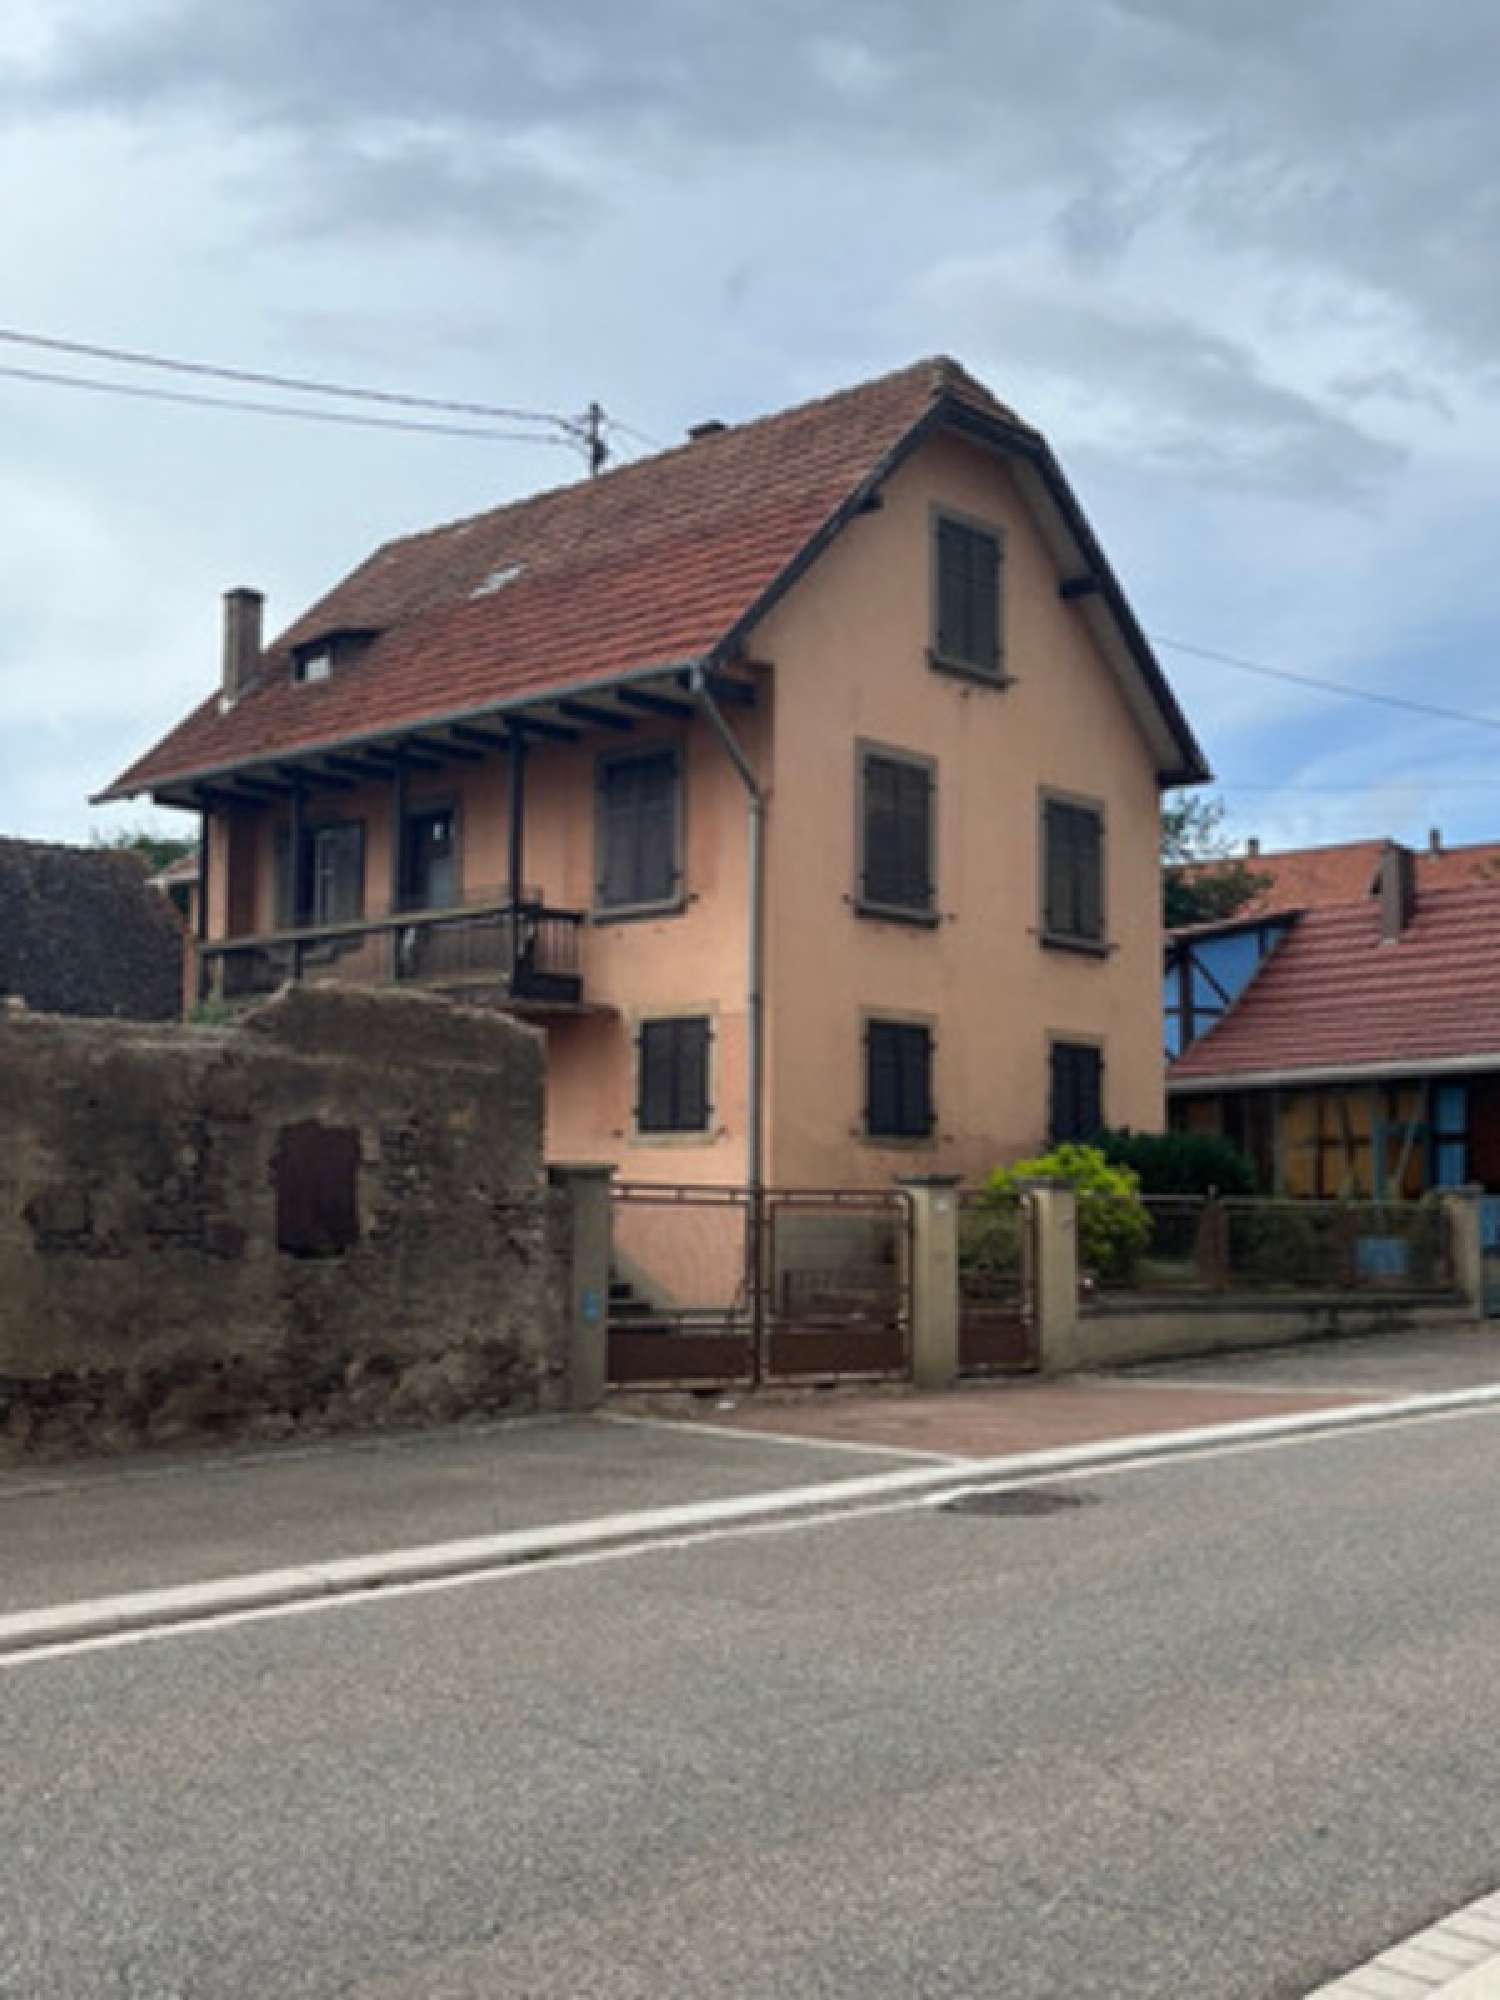  à vendre maison Ergersheim Bas-Rhin 2